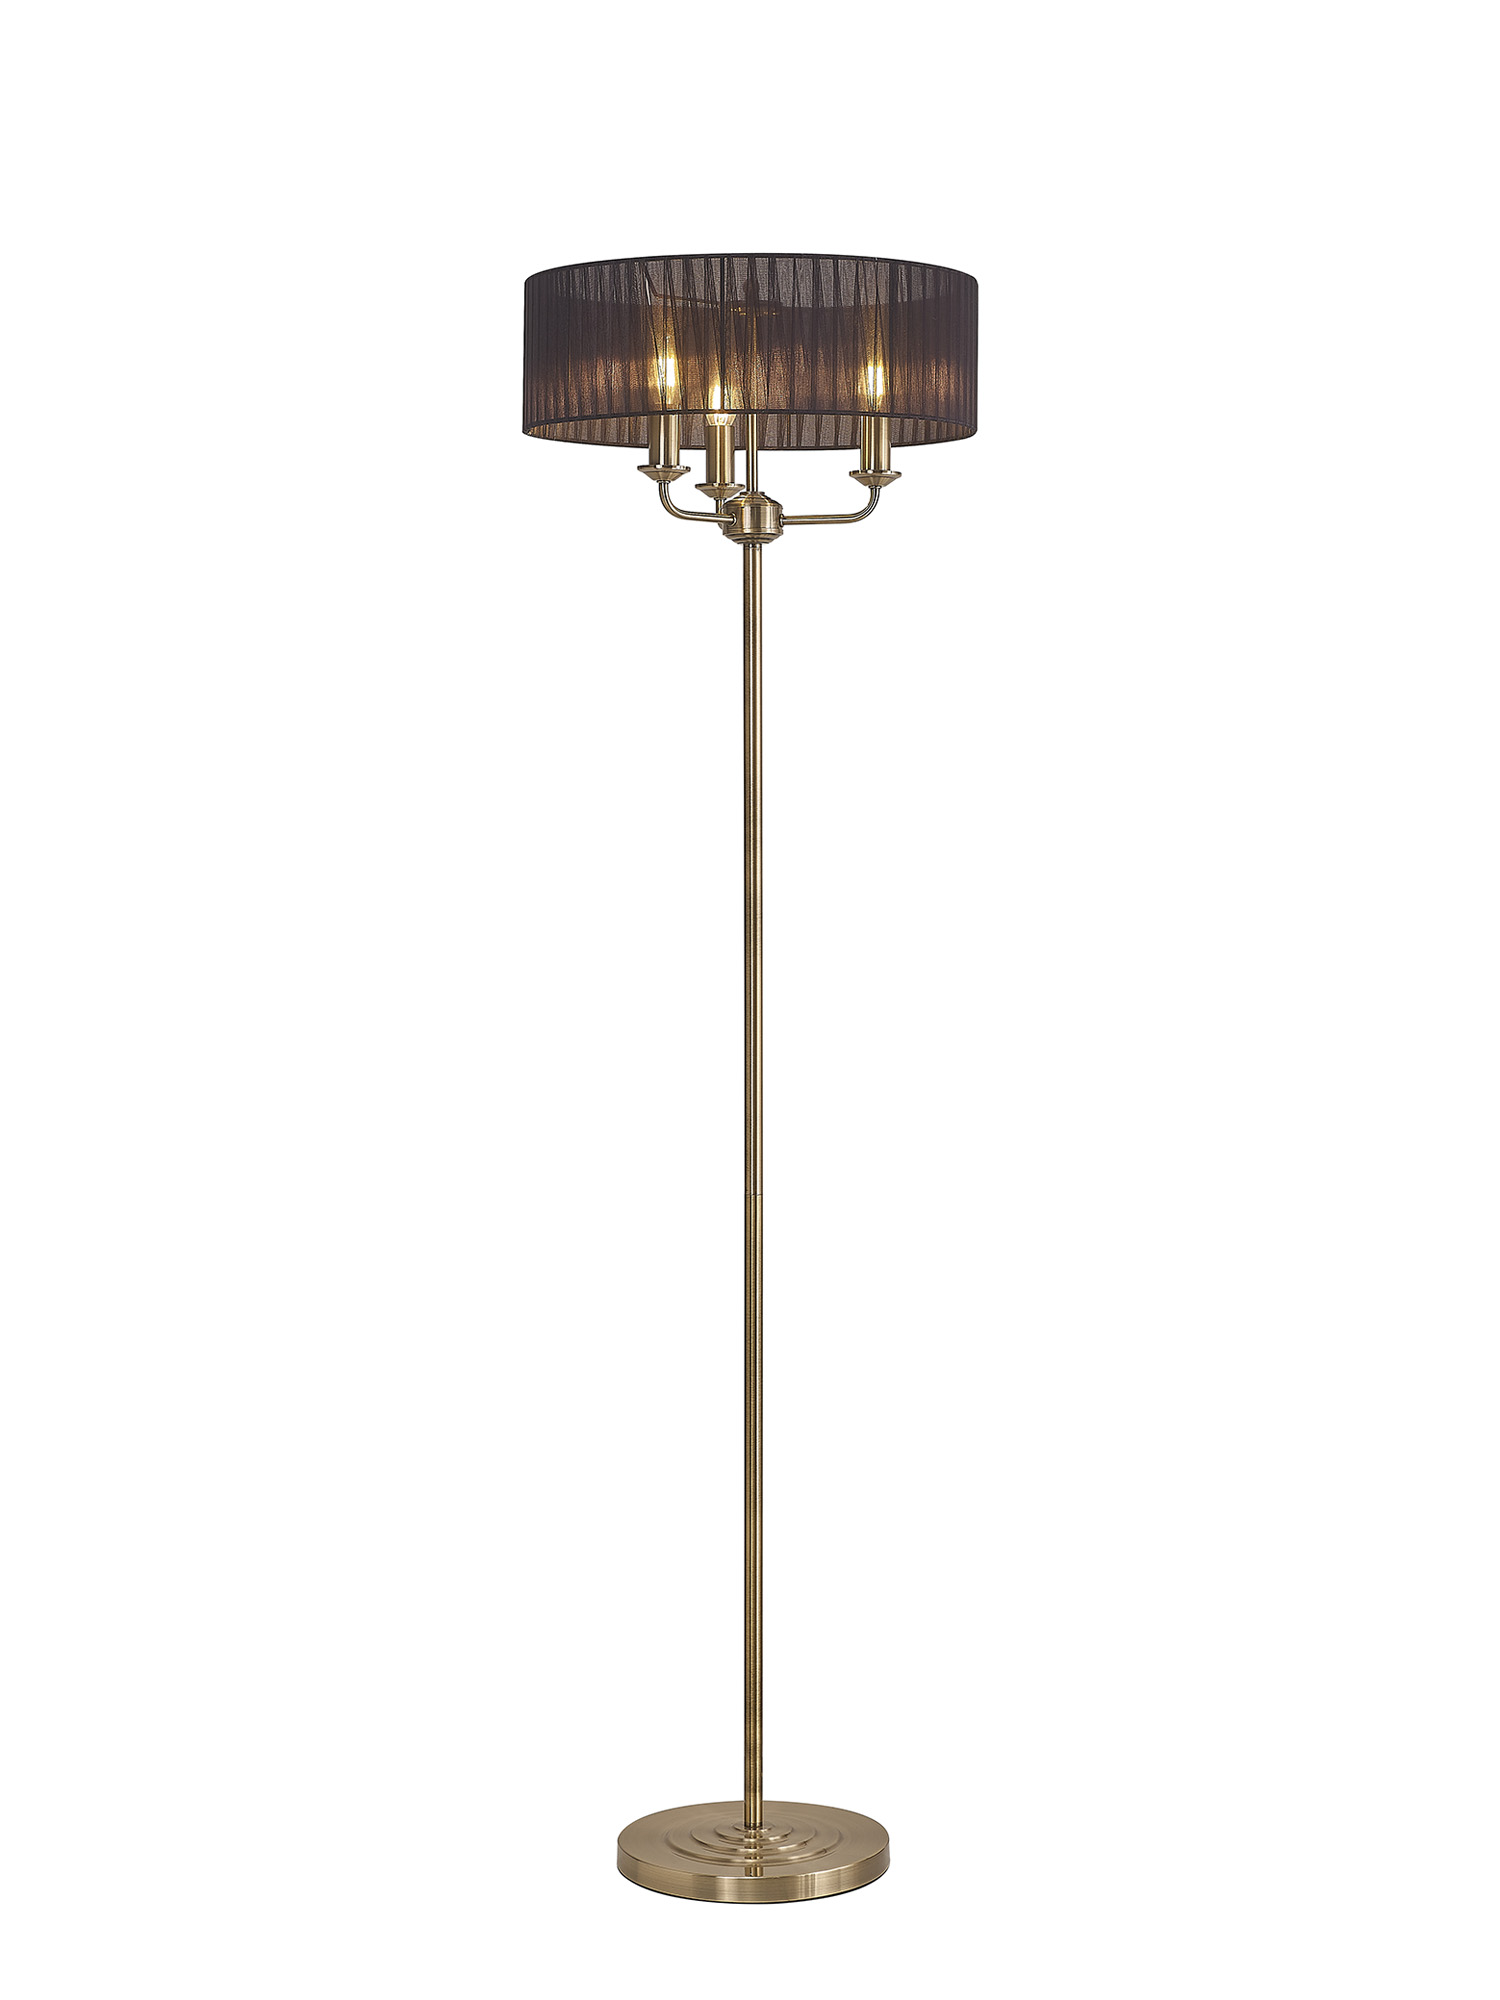 DK0908  Banyan 45cm 3 Light Floor Lamp Antique Brass, Black